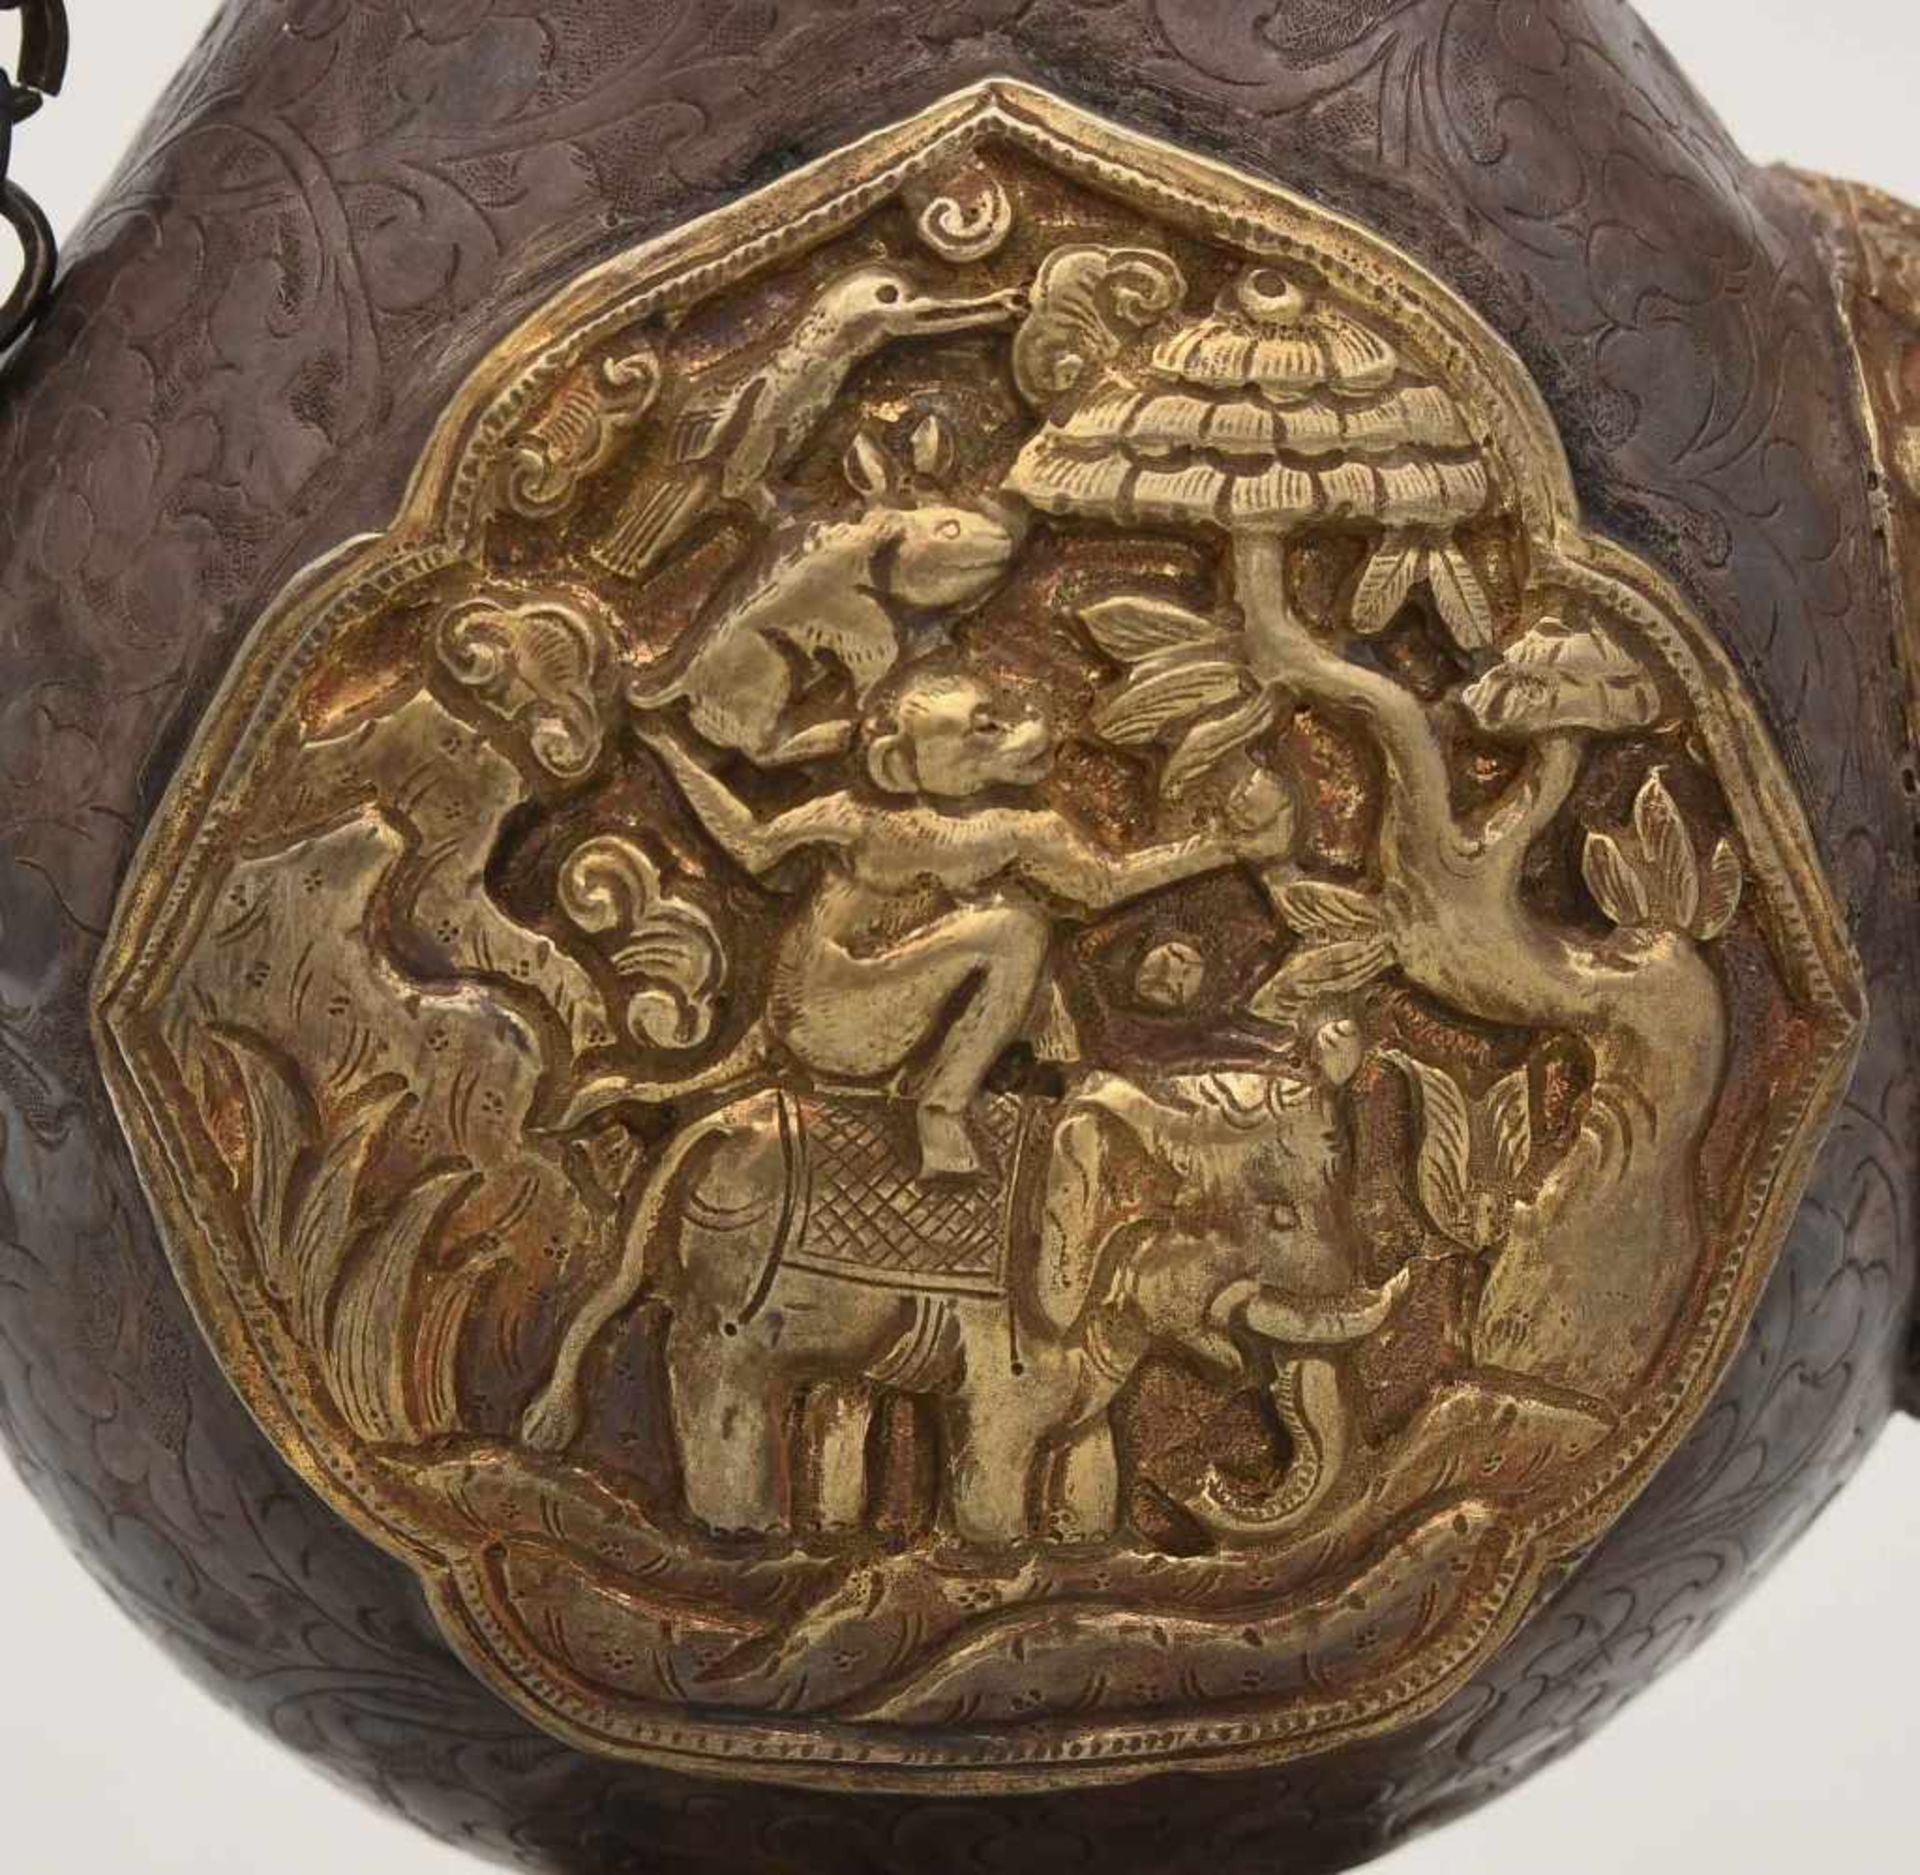 RitualkännchenTibet, 19.Jh. Silber, mit vergoldeten Partien. Birnenförmiger Körper auf Lotosfuss, - Bild 3 aus 11